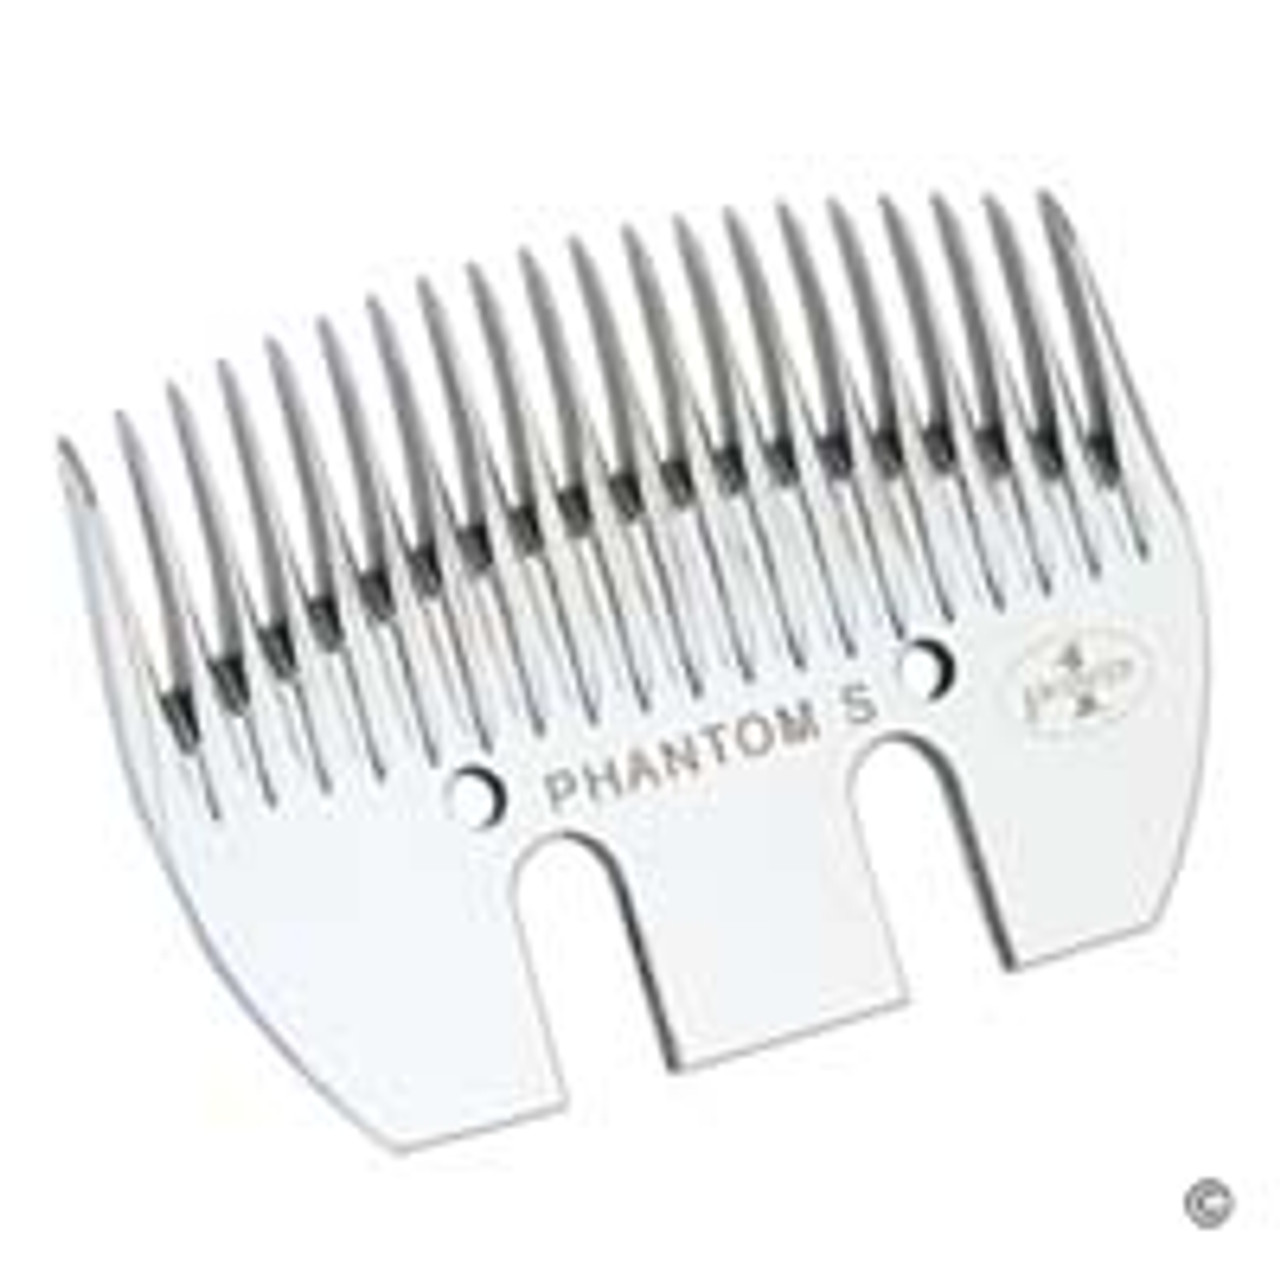 Phantom S Shearing Comb